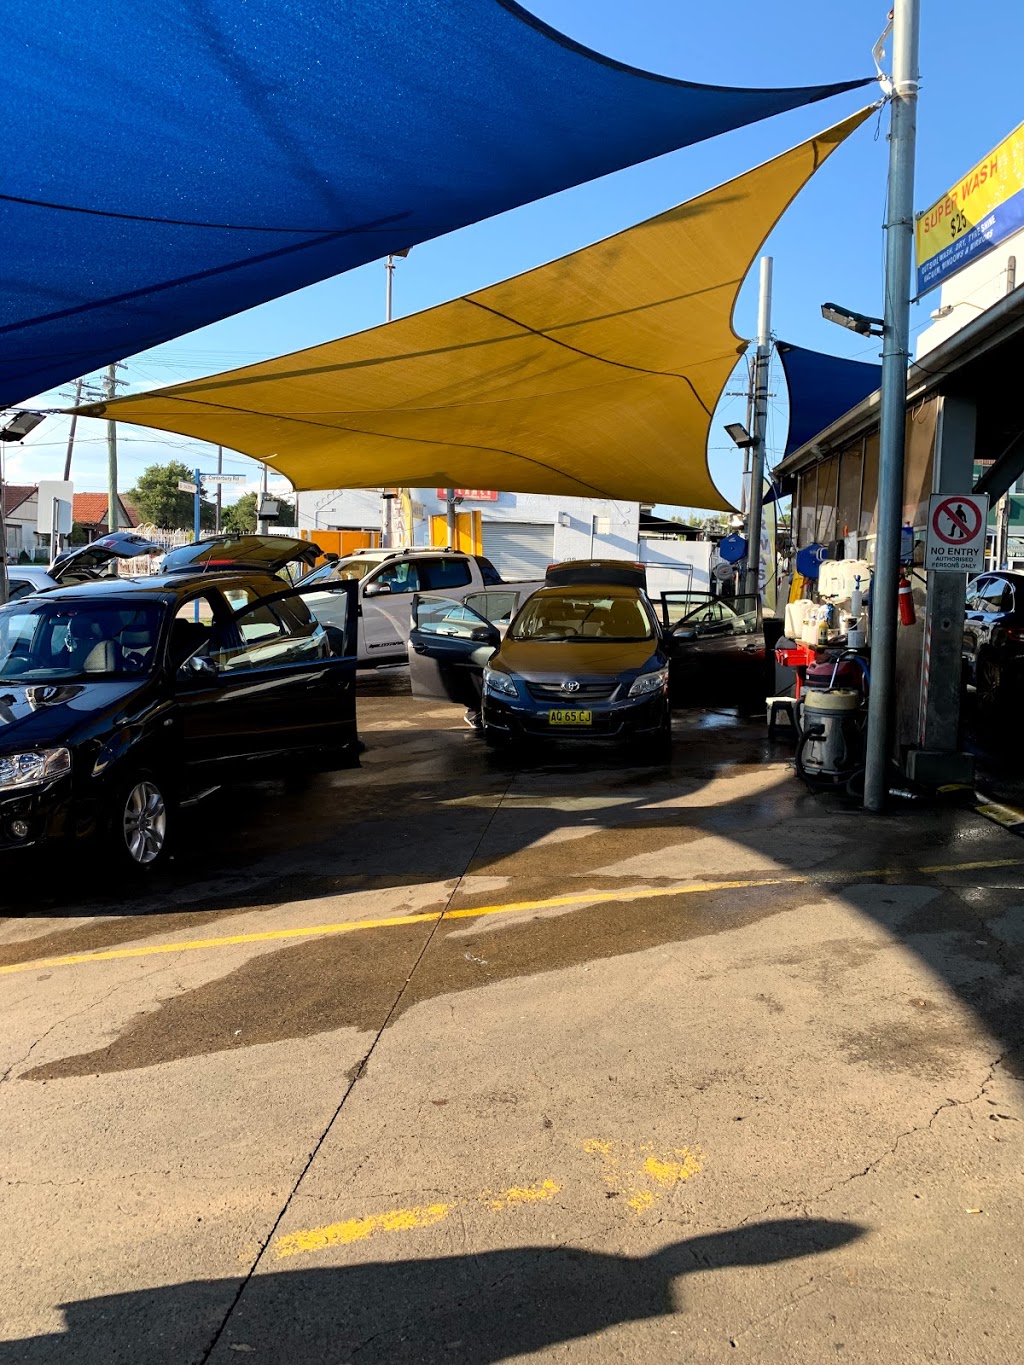 Spotless Carwash N Cafe | car wash | 1/413 Canterbury Rd, Campsie NSW 2194, Australia | 0416529698 OR +61 416 529 698